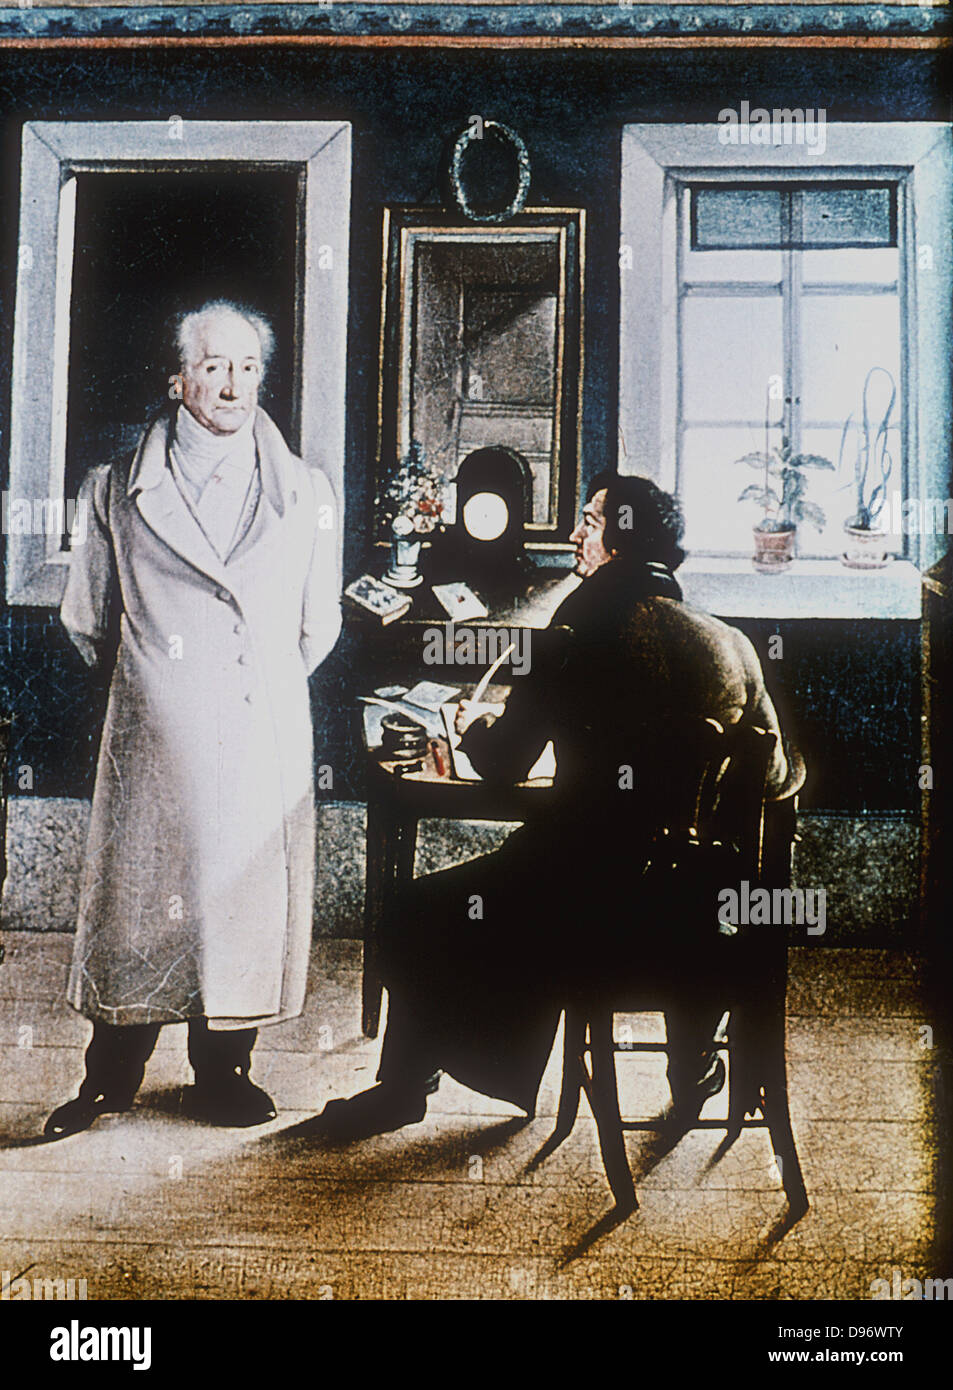 Johann Wolfgang von Goethe (Francoforte sul Meno 1749 - Weimar 1832) poeta tedesco, drammaturgo e scienziato, con il suo segretario. Dipinto di J.J. Scheller. Foto Stock